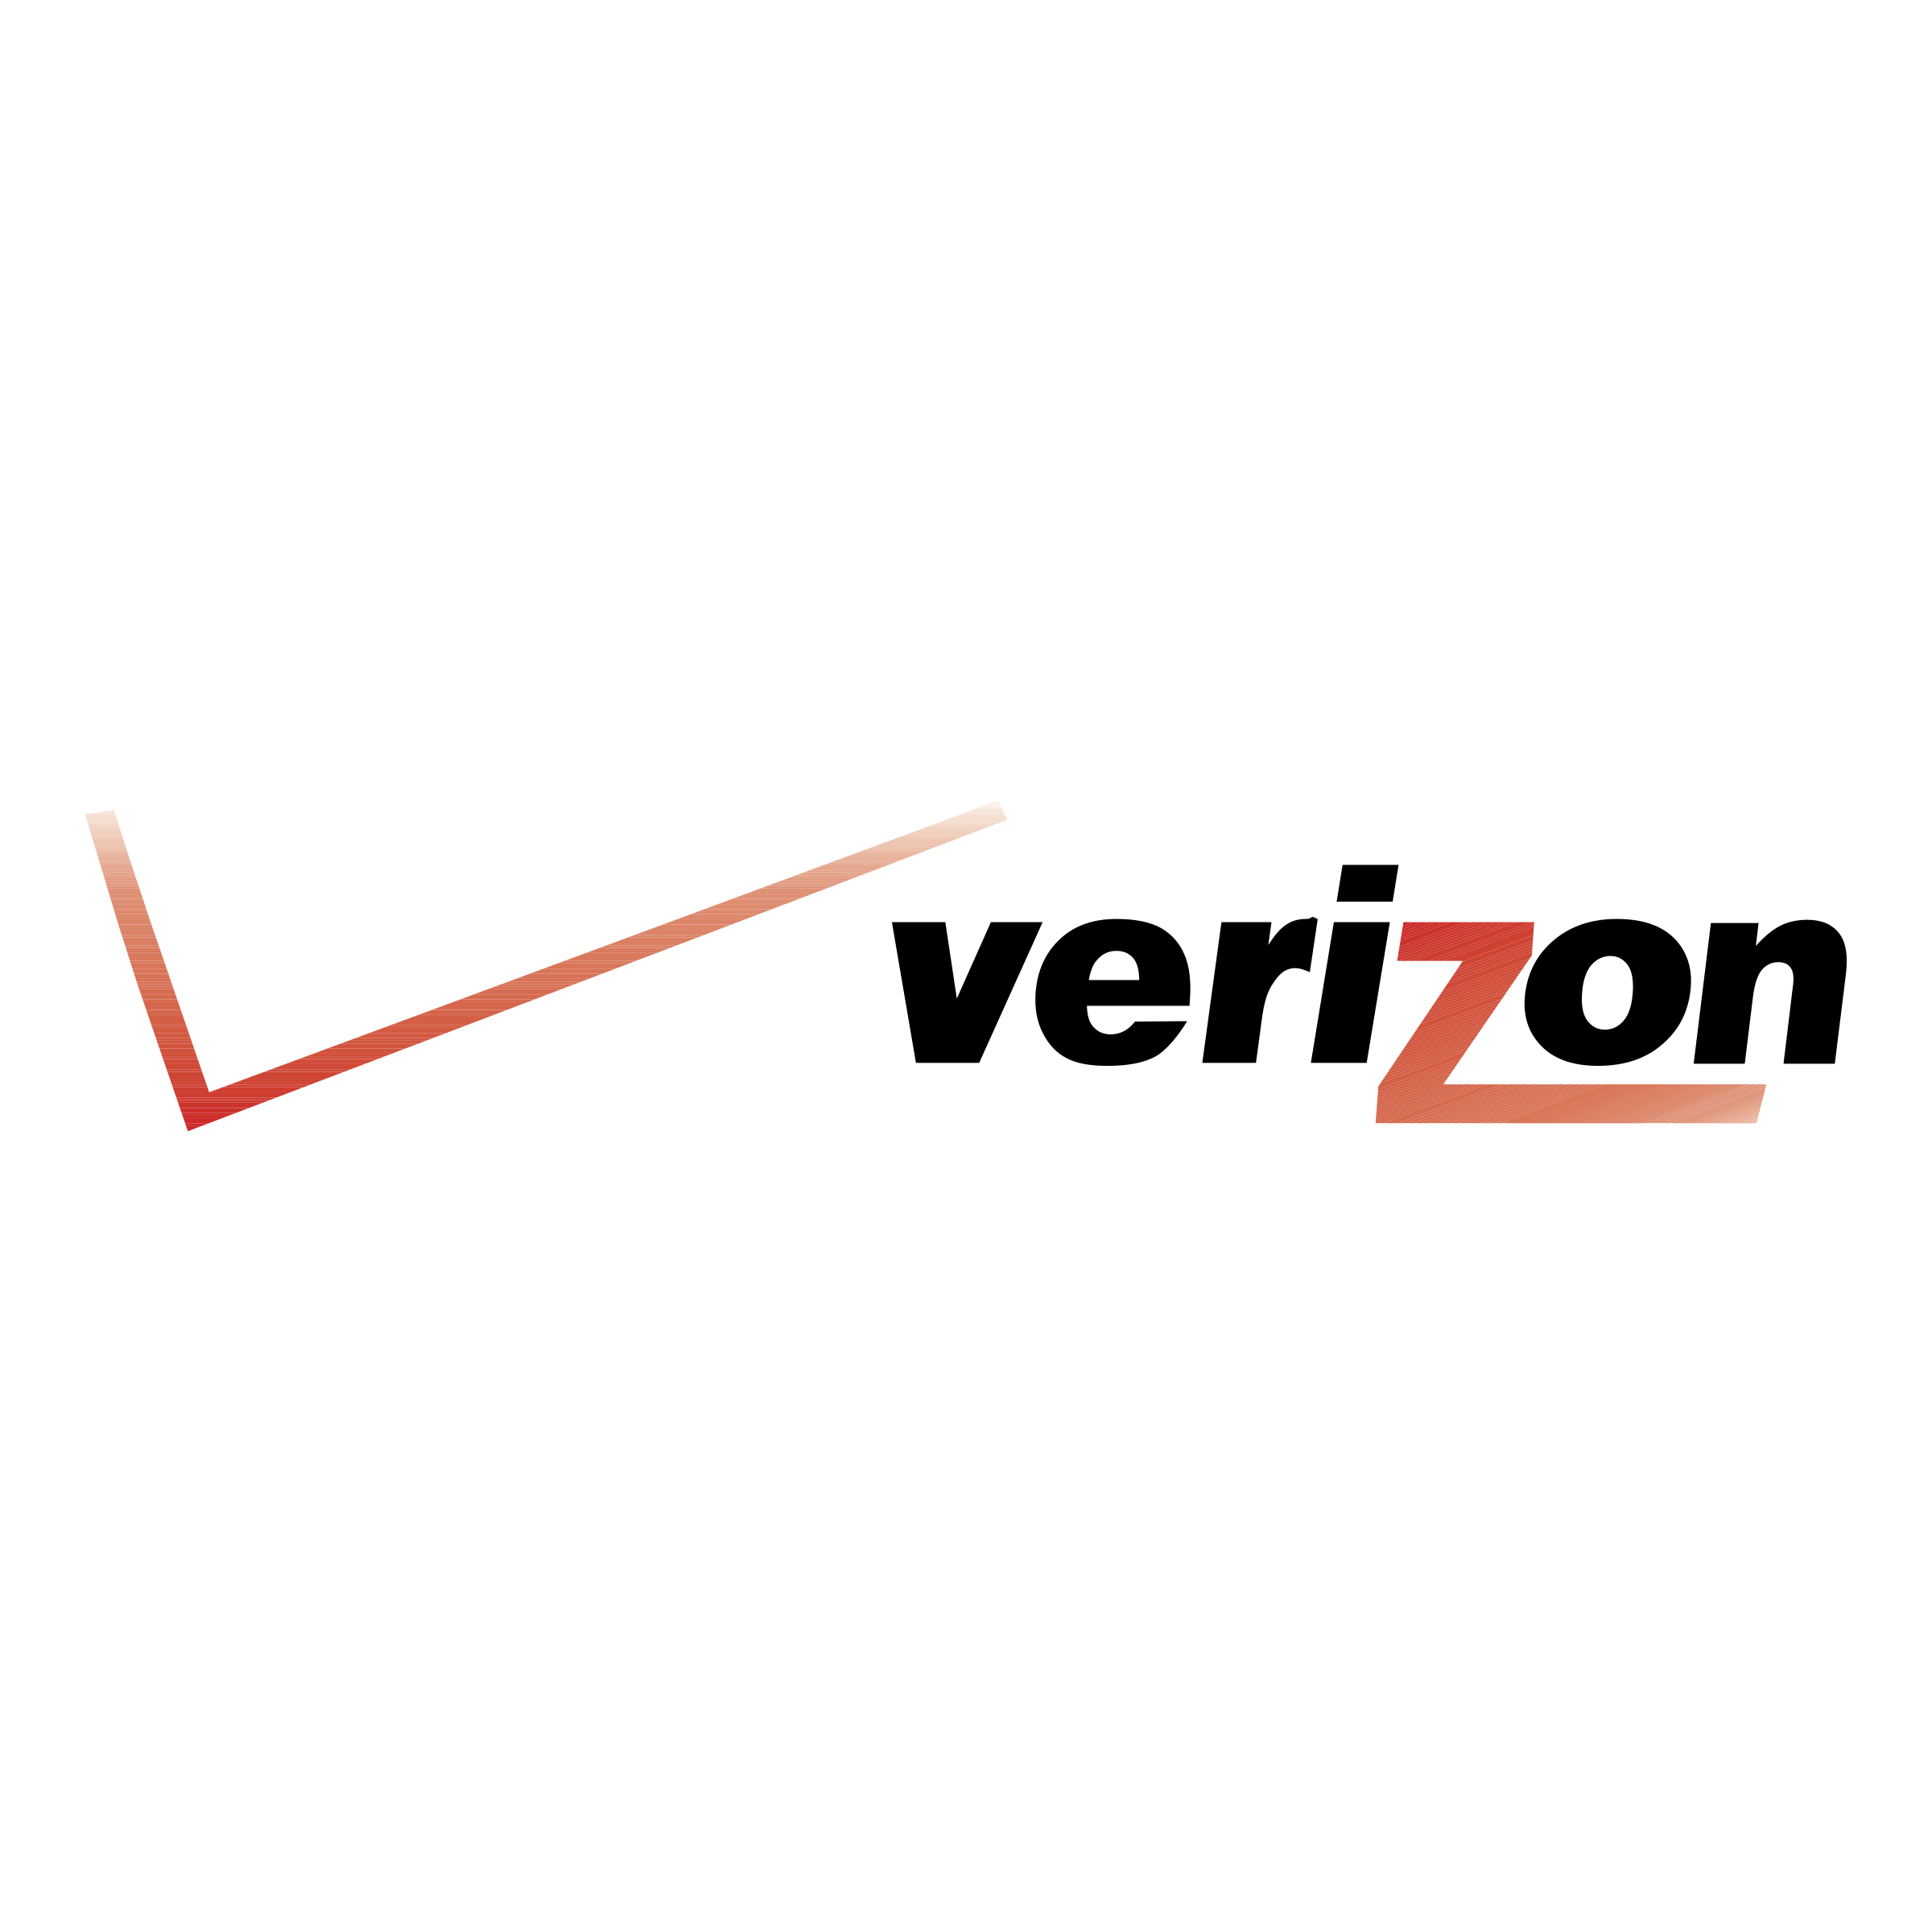 Verison Logo - Verizon Logo PNG Transparent & SVG Vector - Freebie Supply